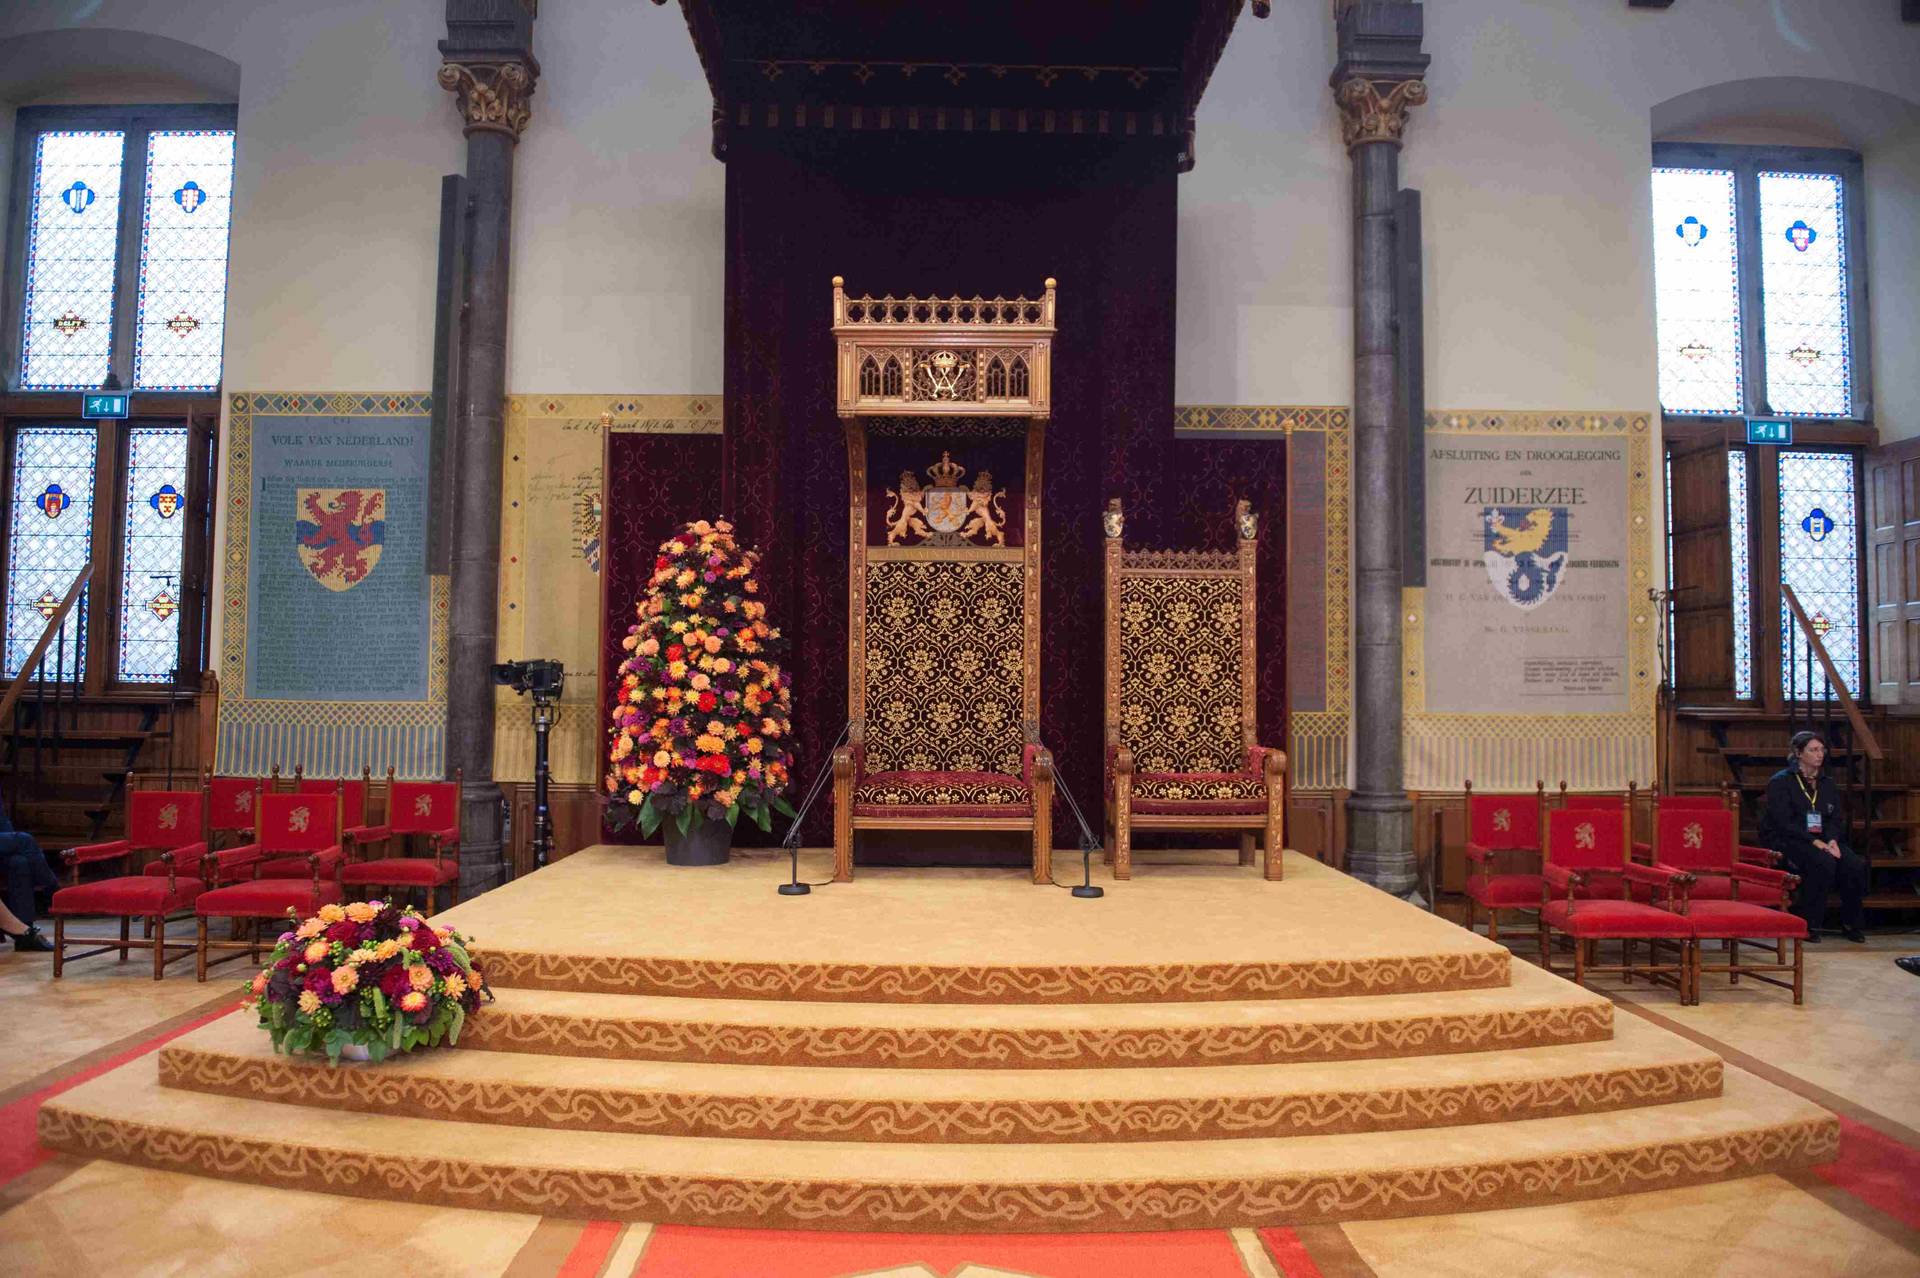 De tronen in de Ridderzaal